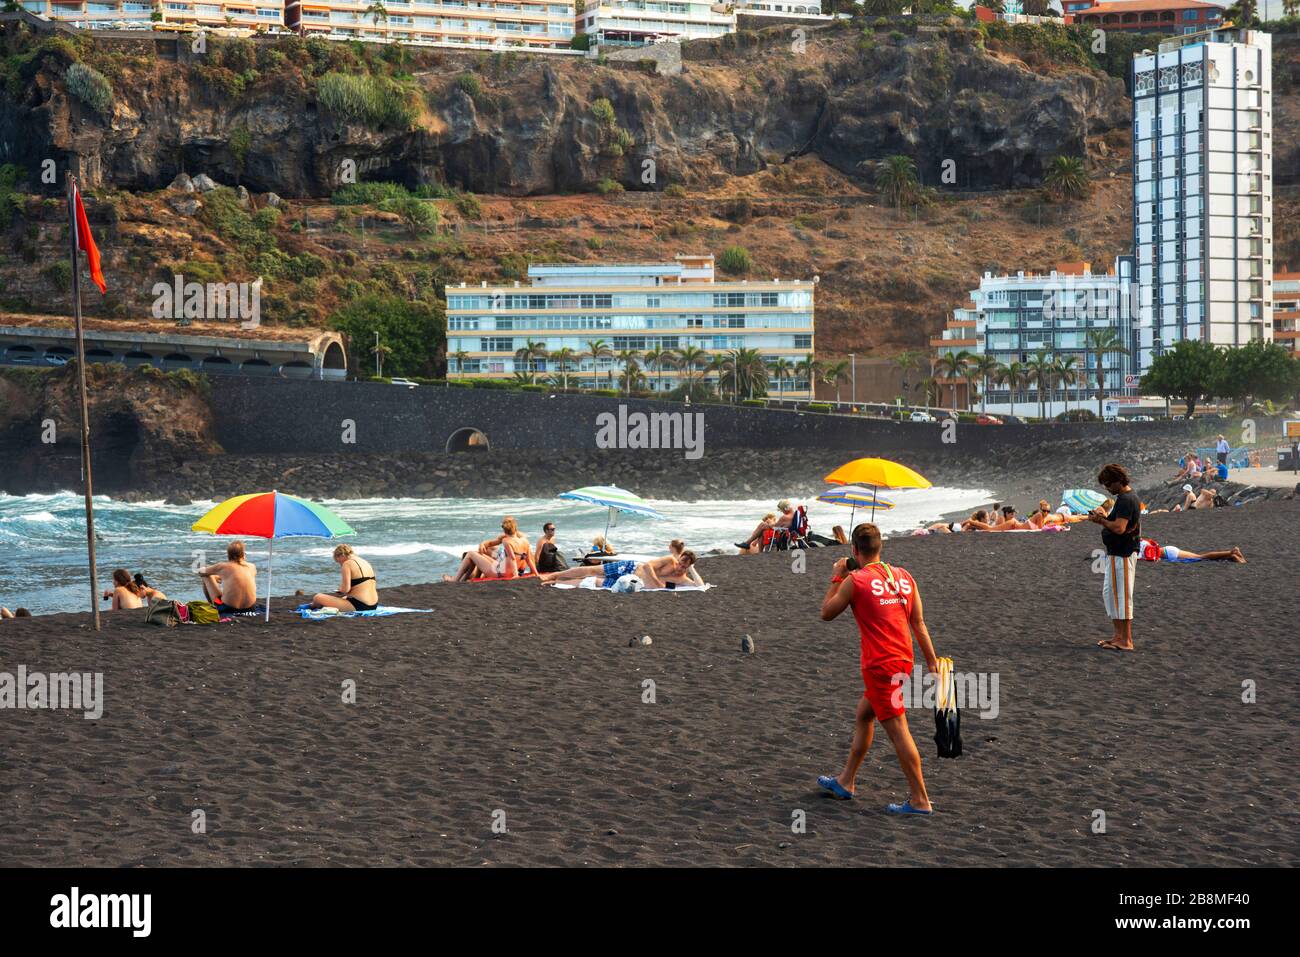 Tourists at los gigantes cliffs volcanic black sand beach in Puerto de la Cruz, Tenerife Island, Canary Islands, Spain Stock Photo